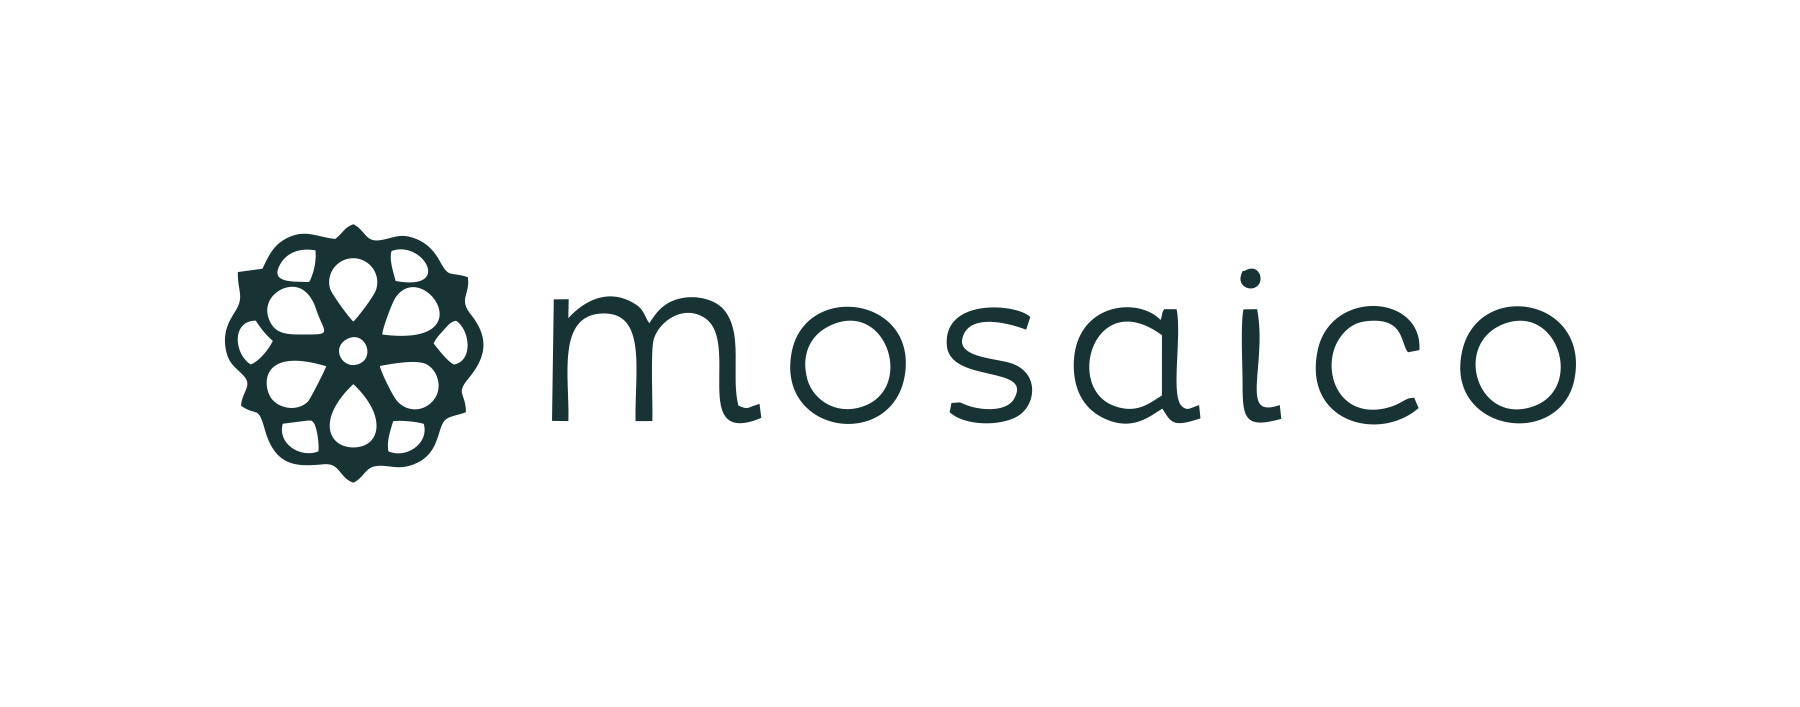 Mosaico : Brand Short Description Type Here.